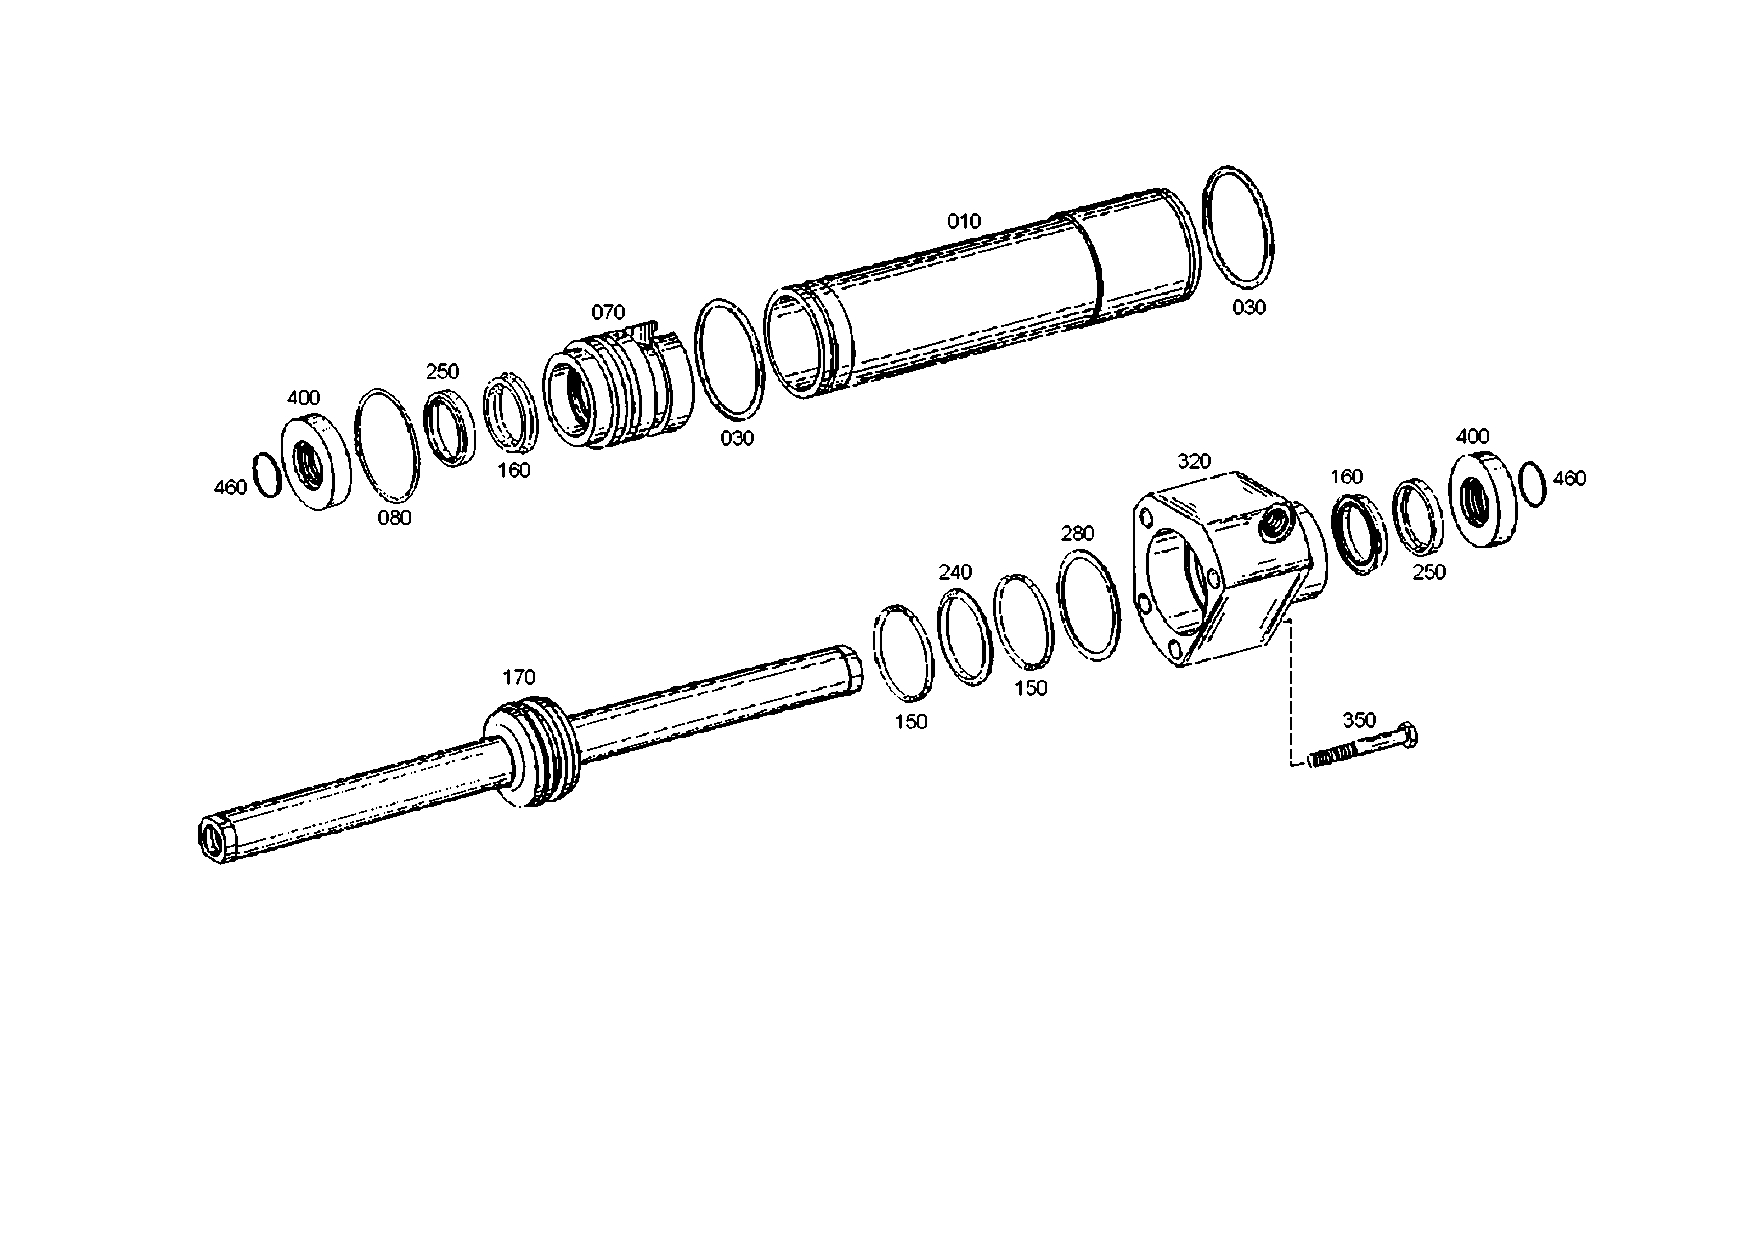 drawing for AGCO 020850R1 - SCRAPER (figure 2)